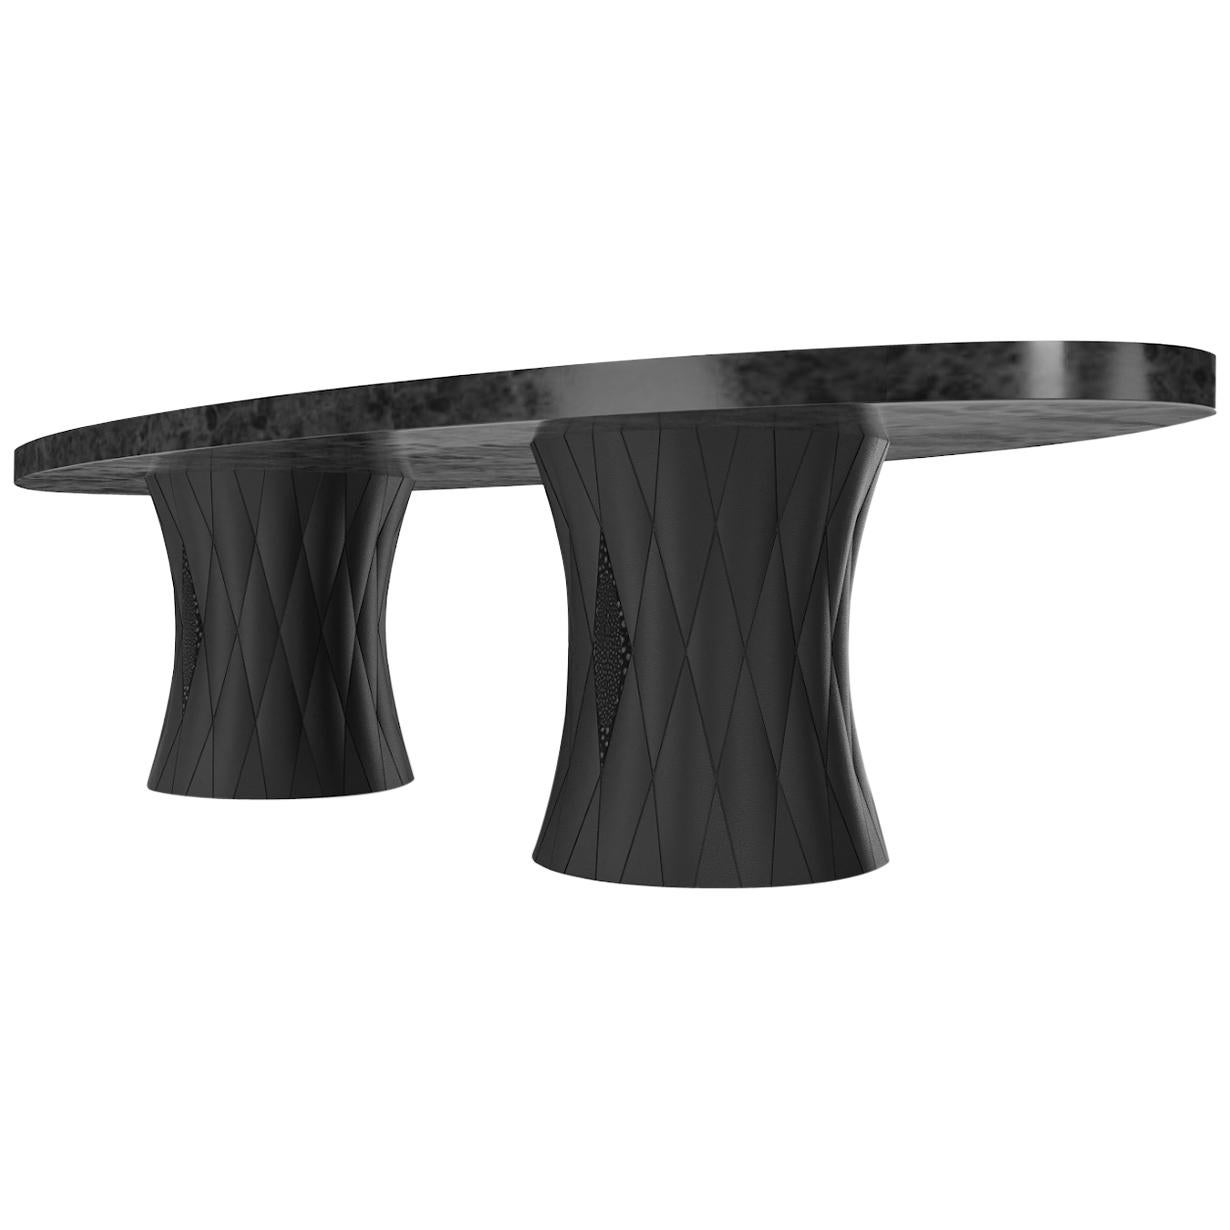 CORONADO DINING TABLE - Modern Maple Frise Charcoal Top with Seta Leather Base